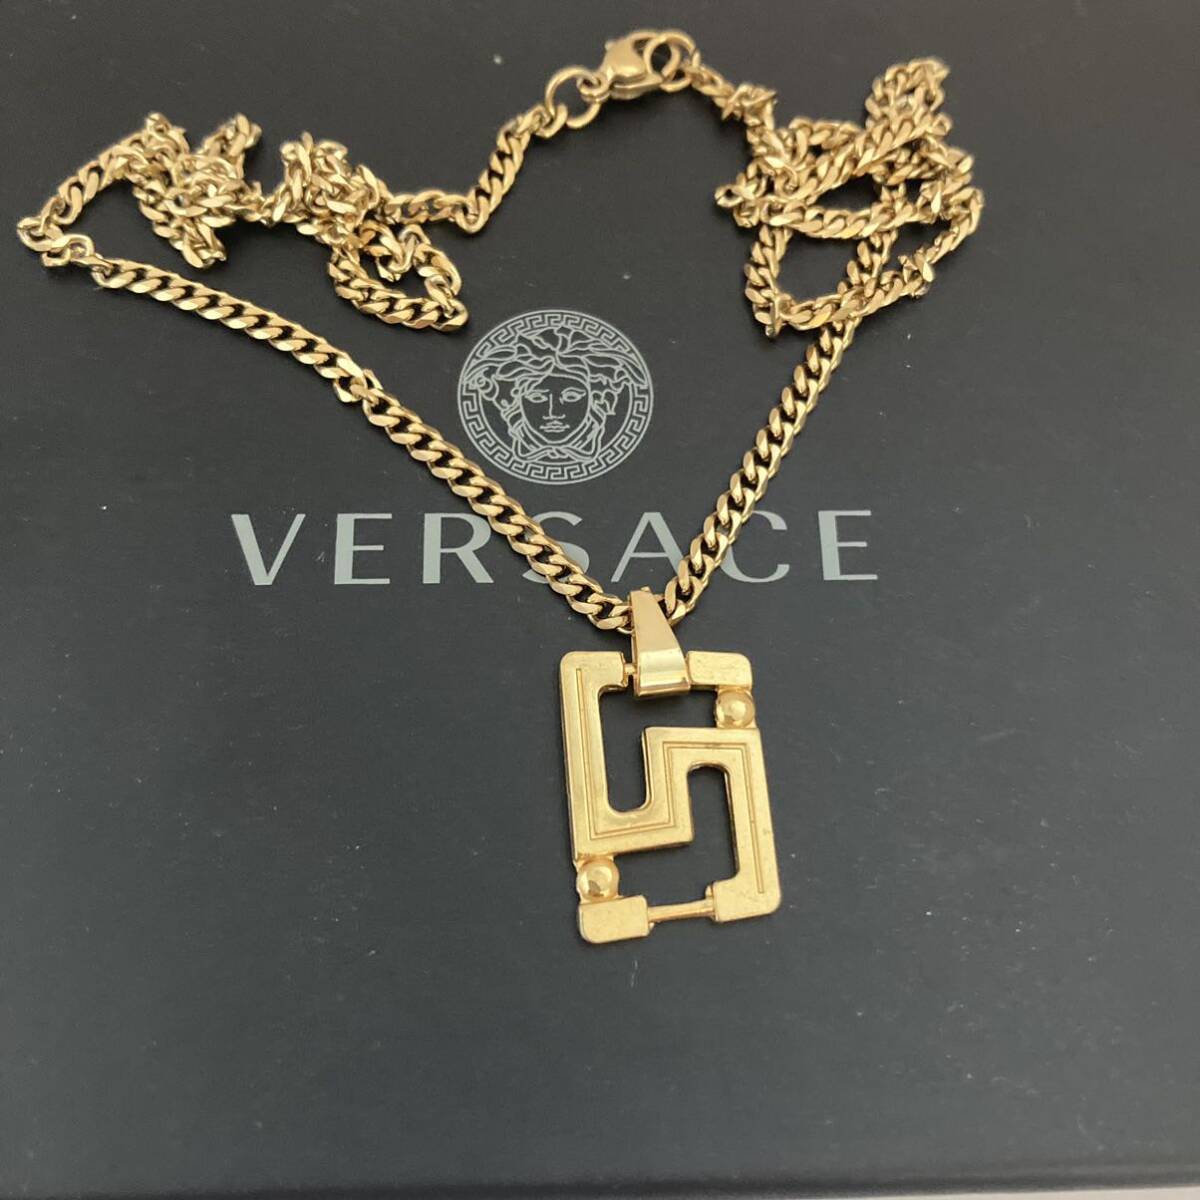 [ regular goods ] Versace Gree k charm necklace beautiful goods flat 50 centimeter necklace 